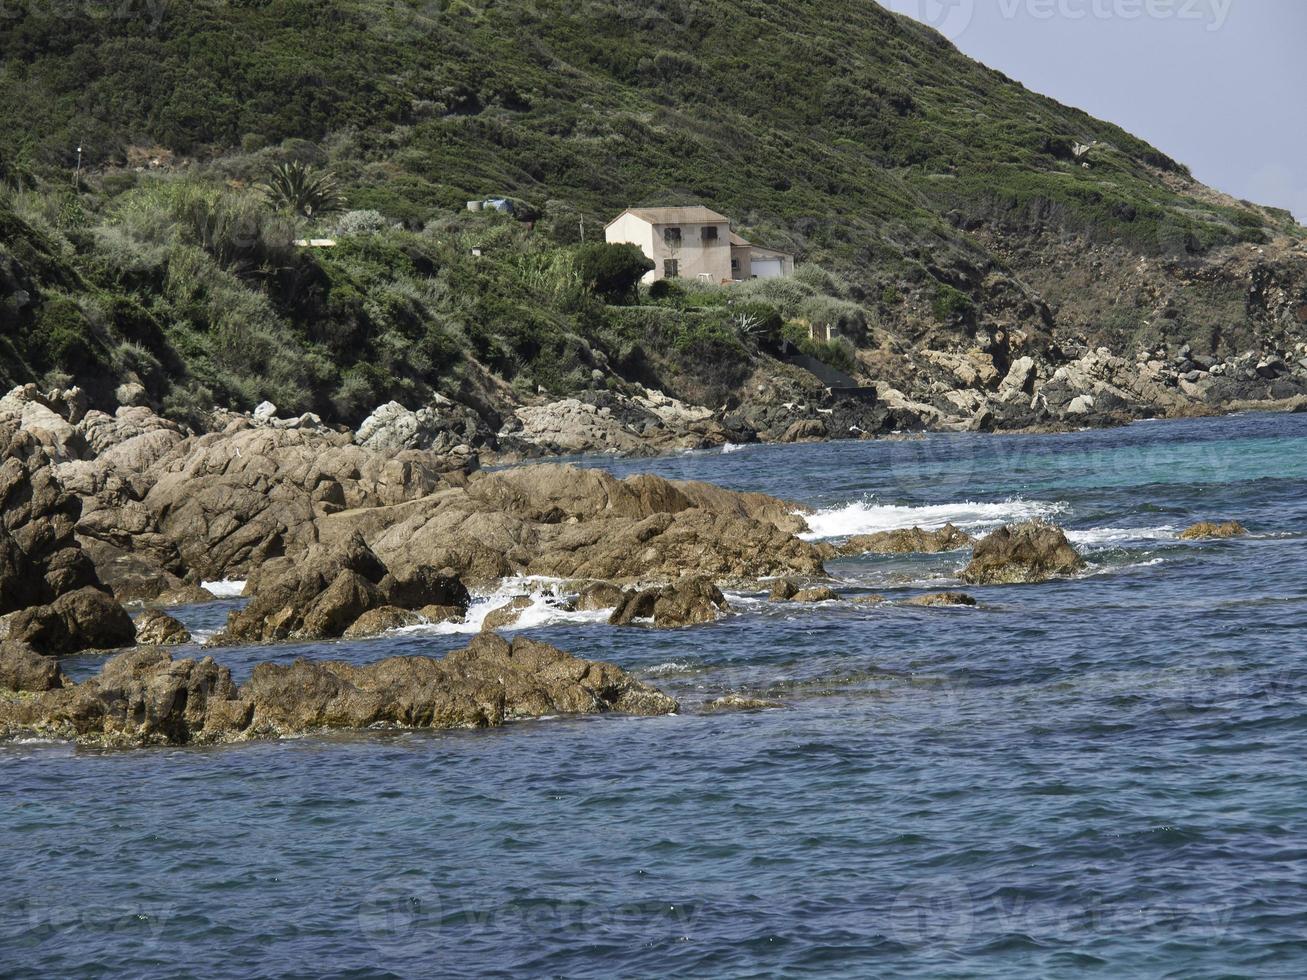 the island corsica photo